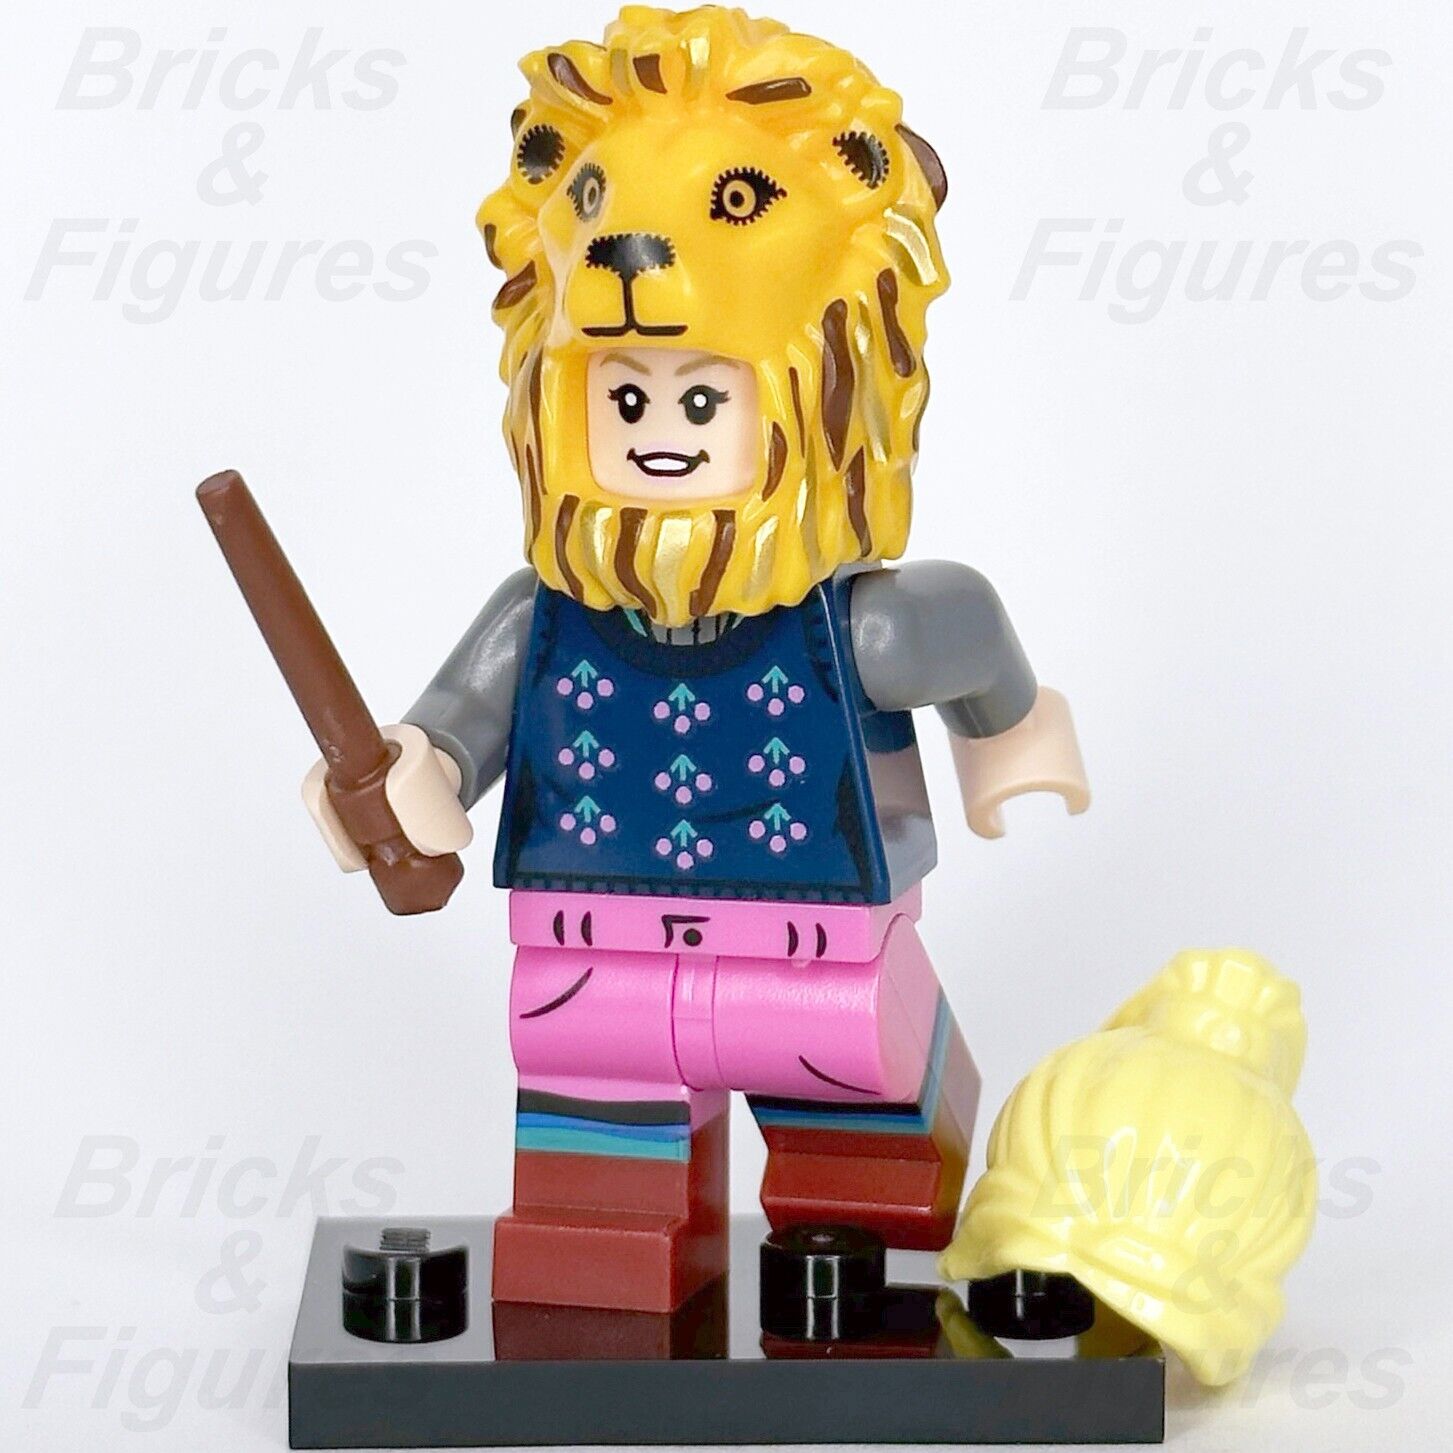 LEGO Harry Potter Luna Lovegood Minifigure Series 2 Lion Hat Head Outfit 71028 - Bricks & Figures